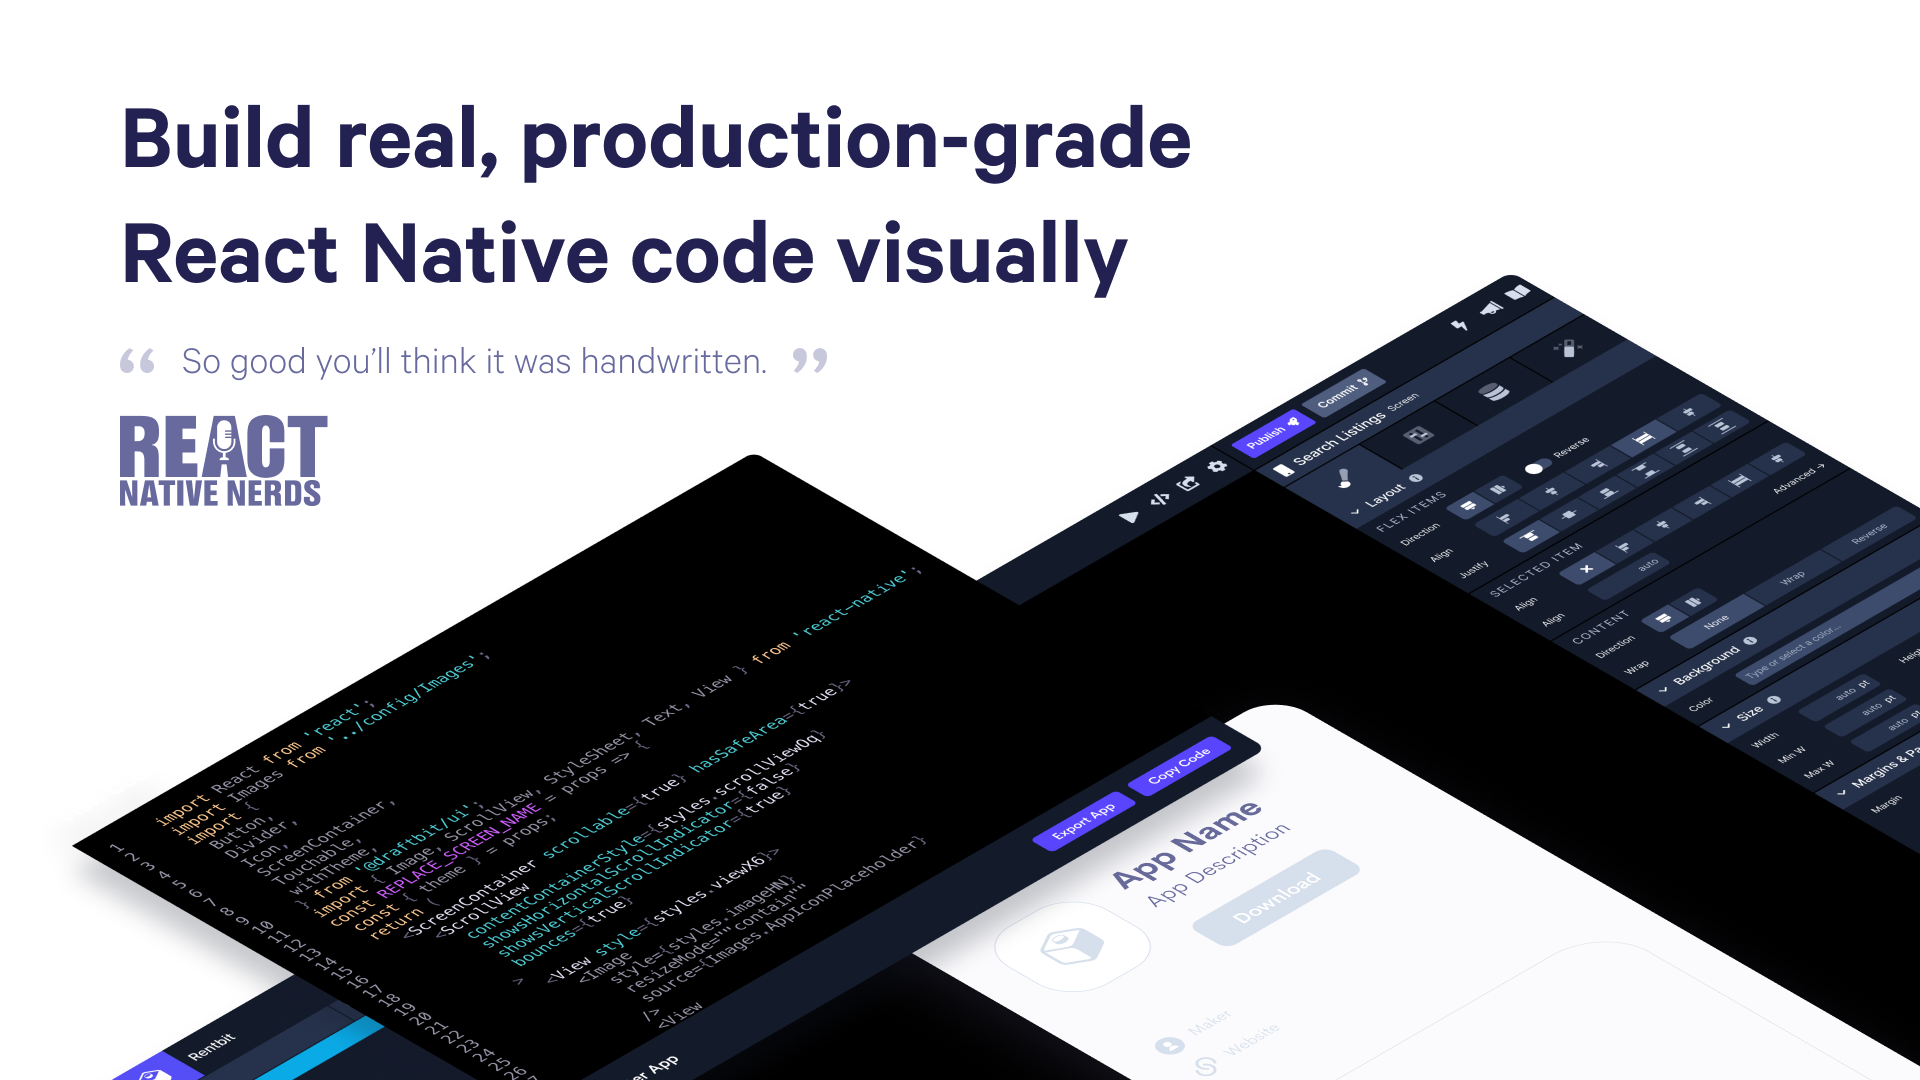 Build real, production-grade React Native code visually.